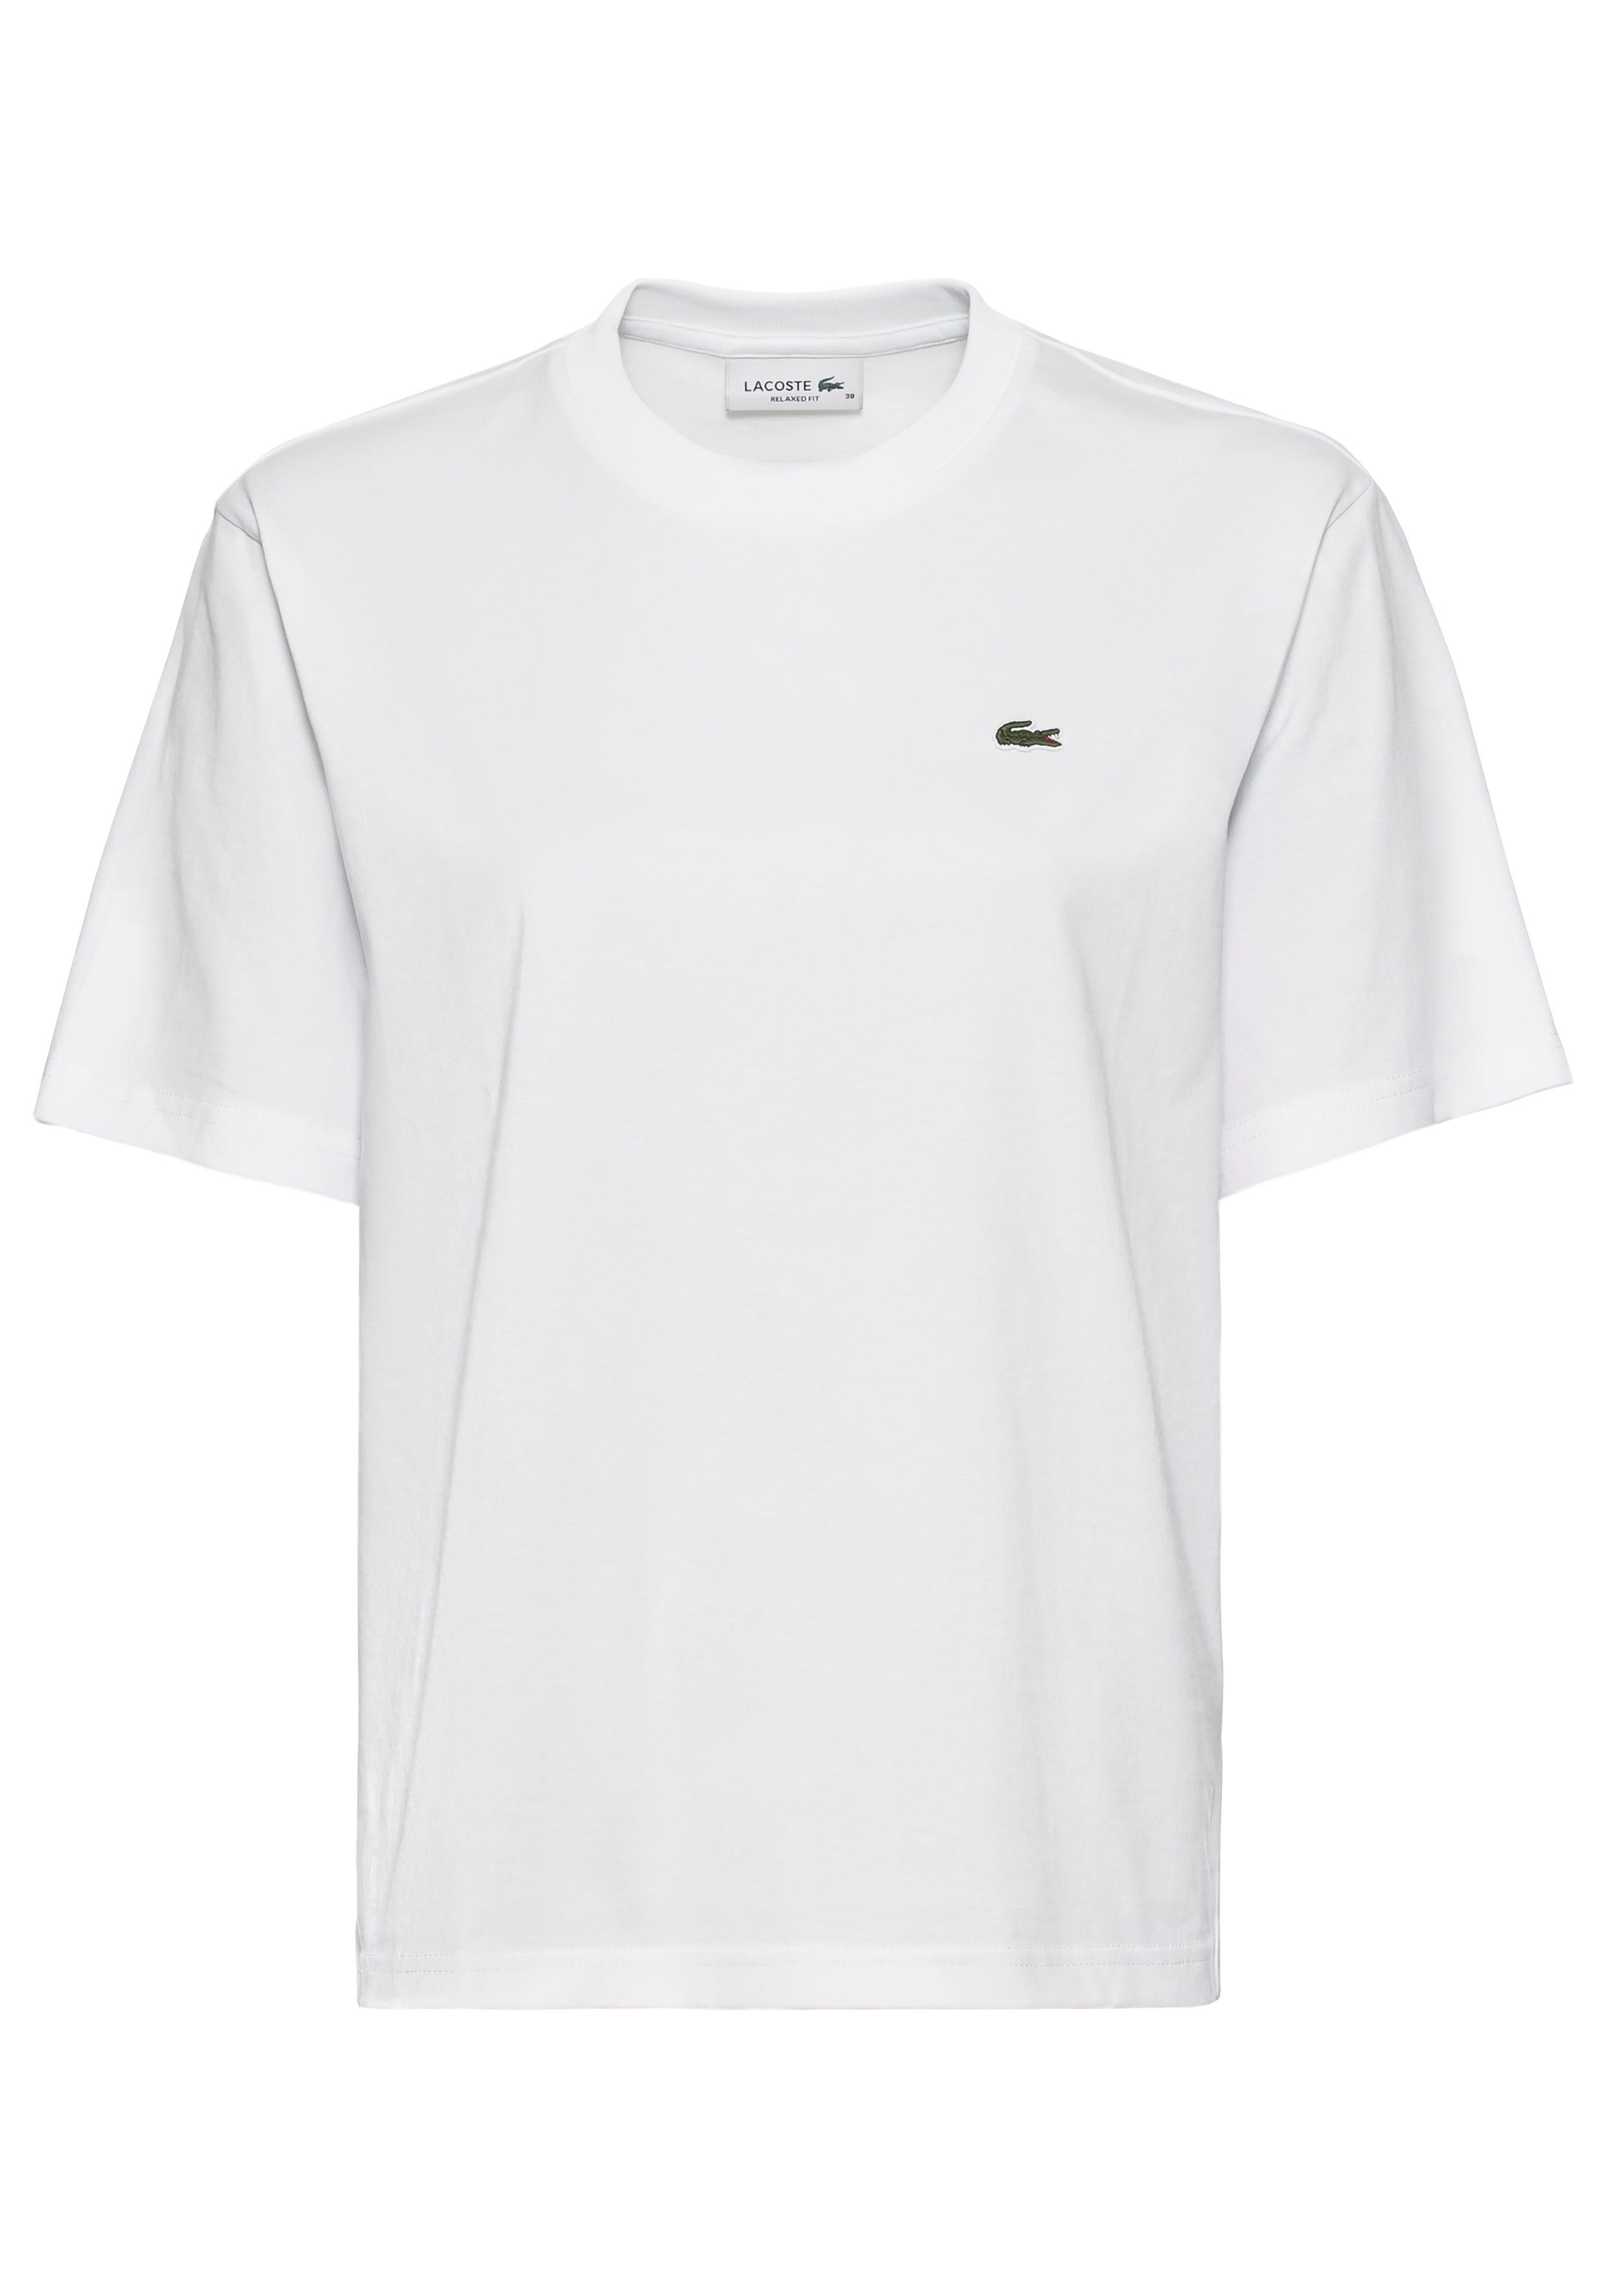 Lacoste T-Shirt, Single Jersey aus reiner Baumwolle | T-Shirts